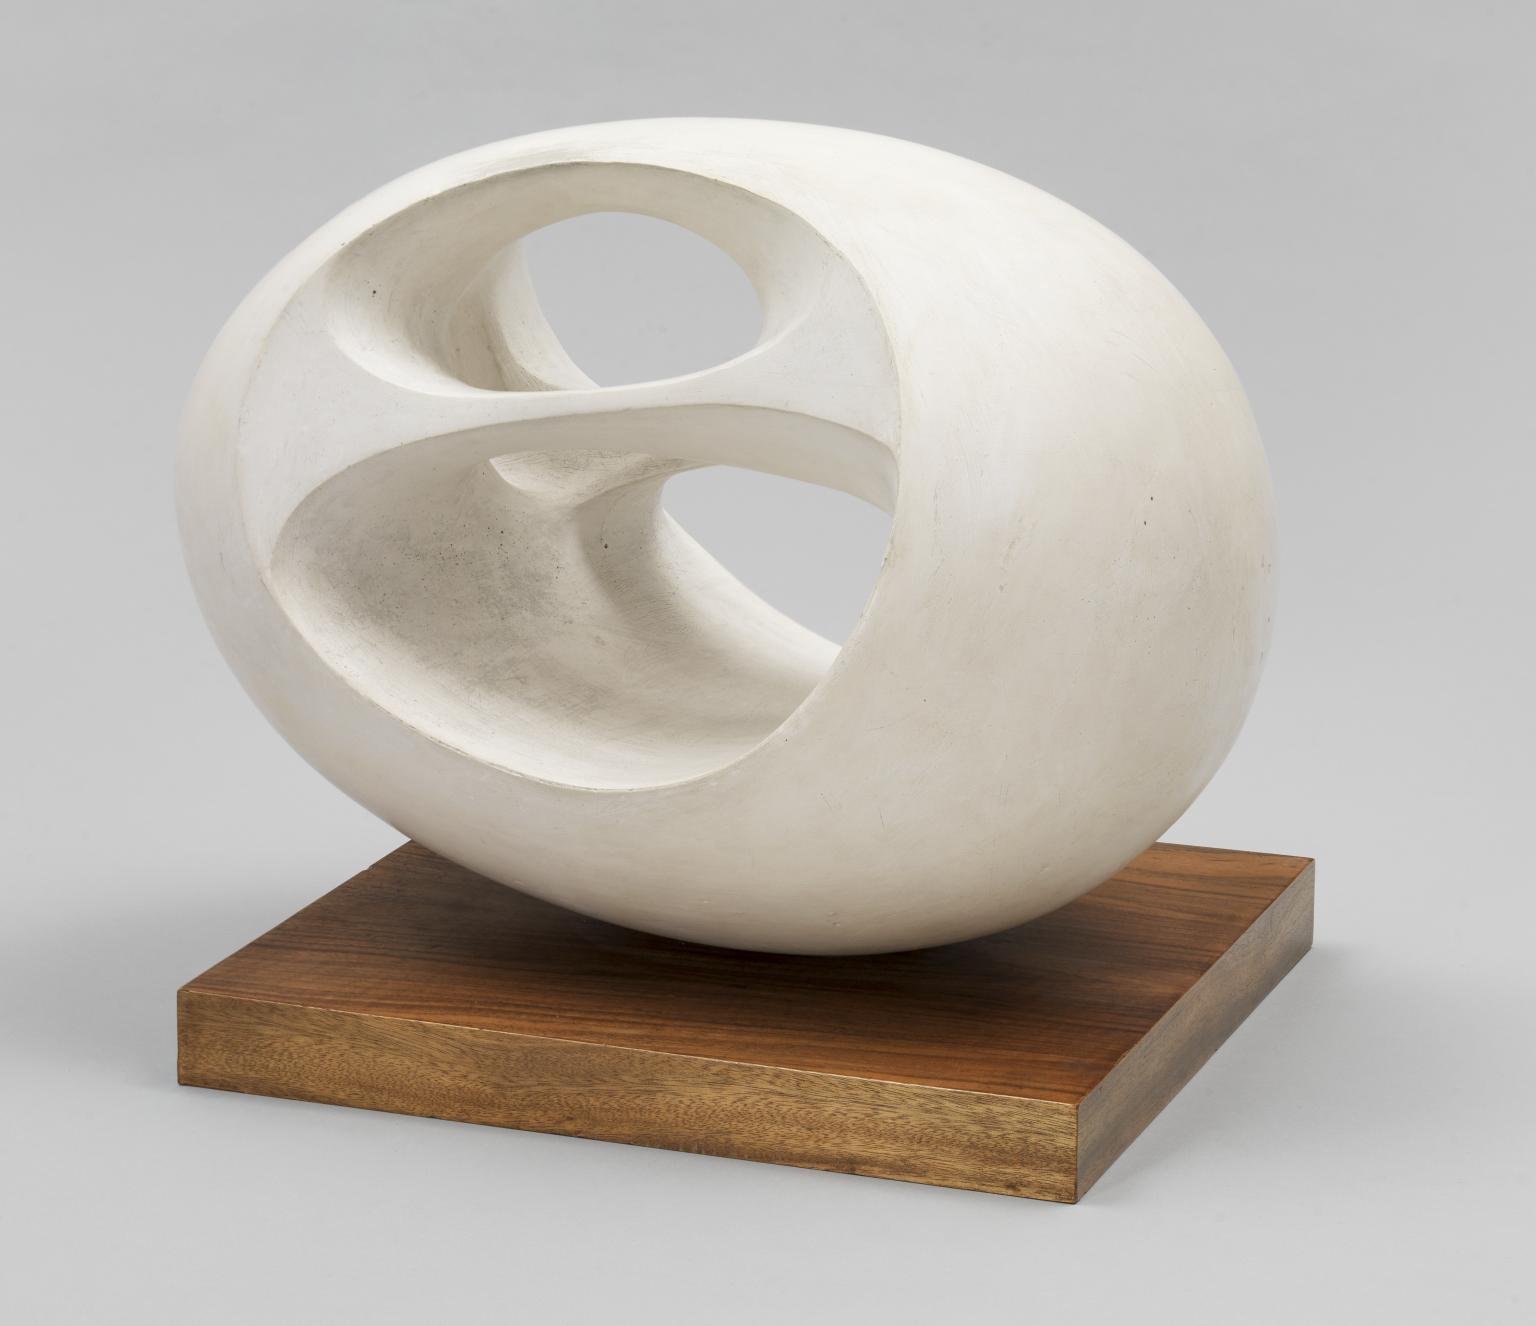 6. Barbara Hepworth, Oval Sculpture (No. 2), 1943